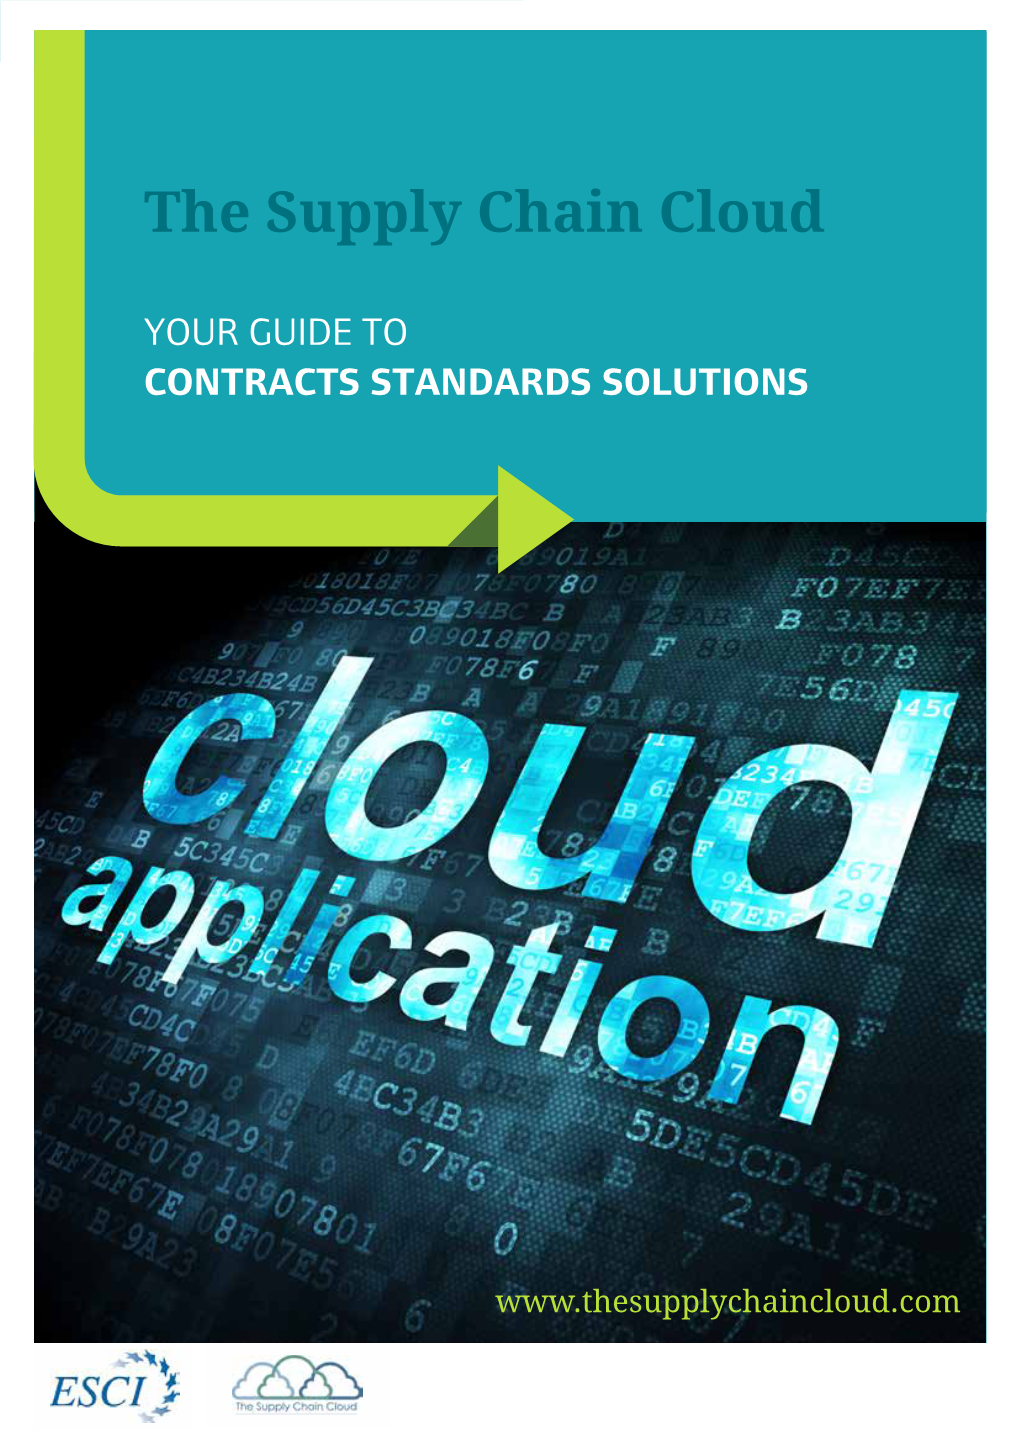 Cloud Computing for Logistics 12